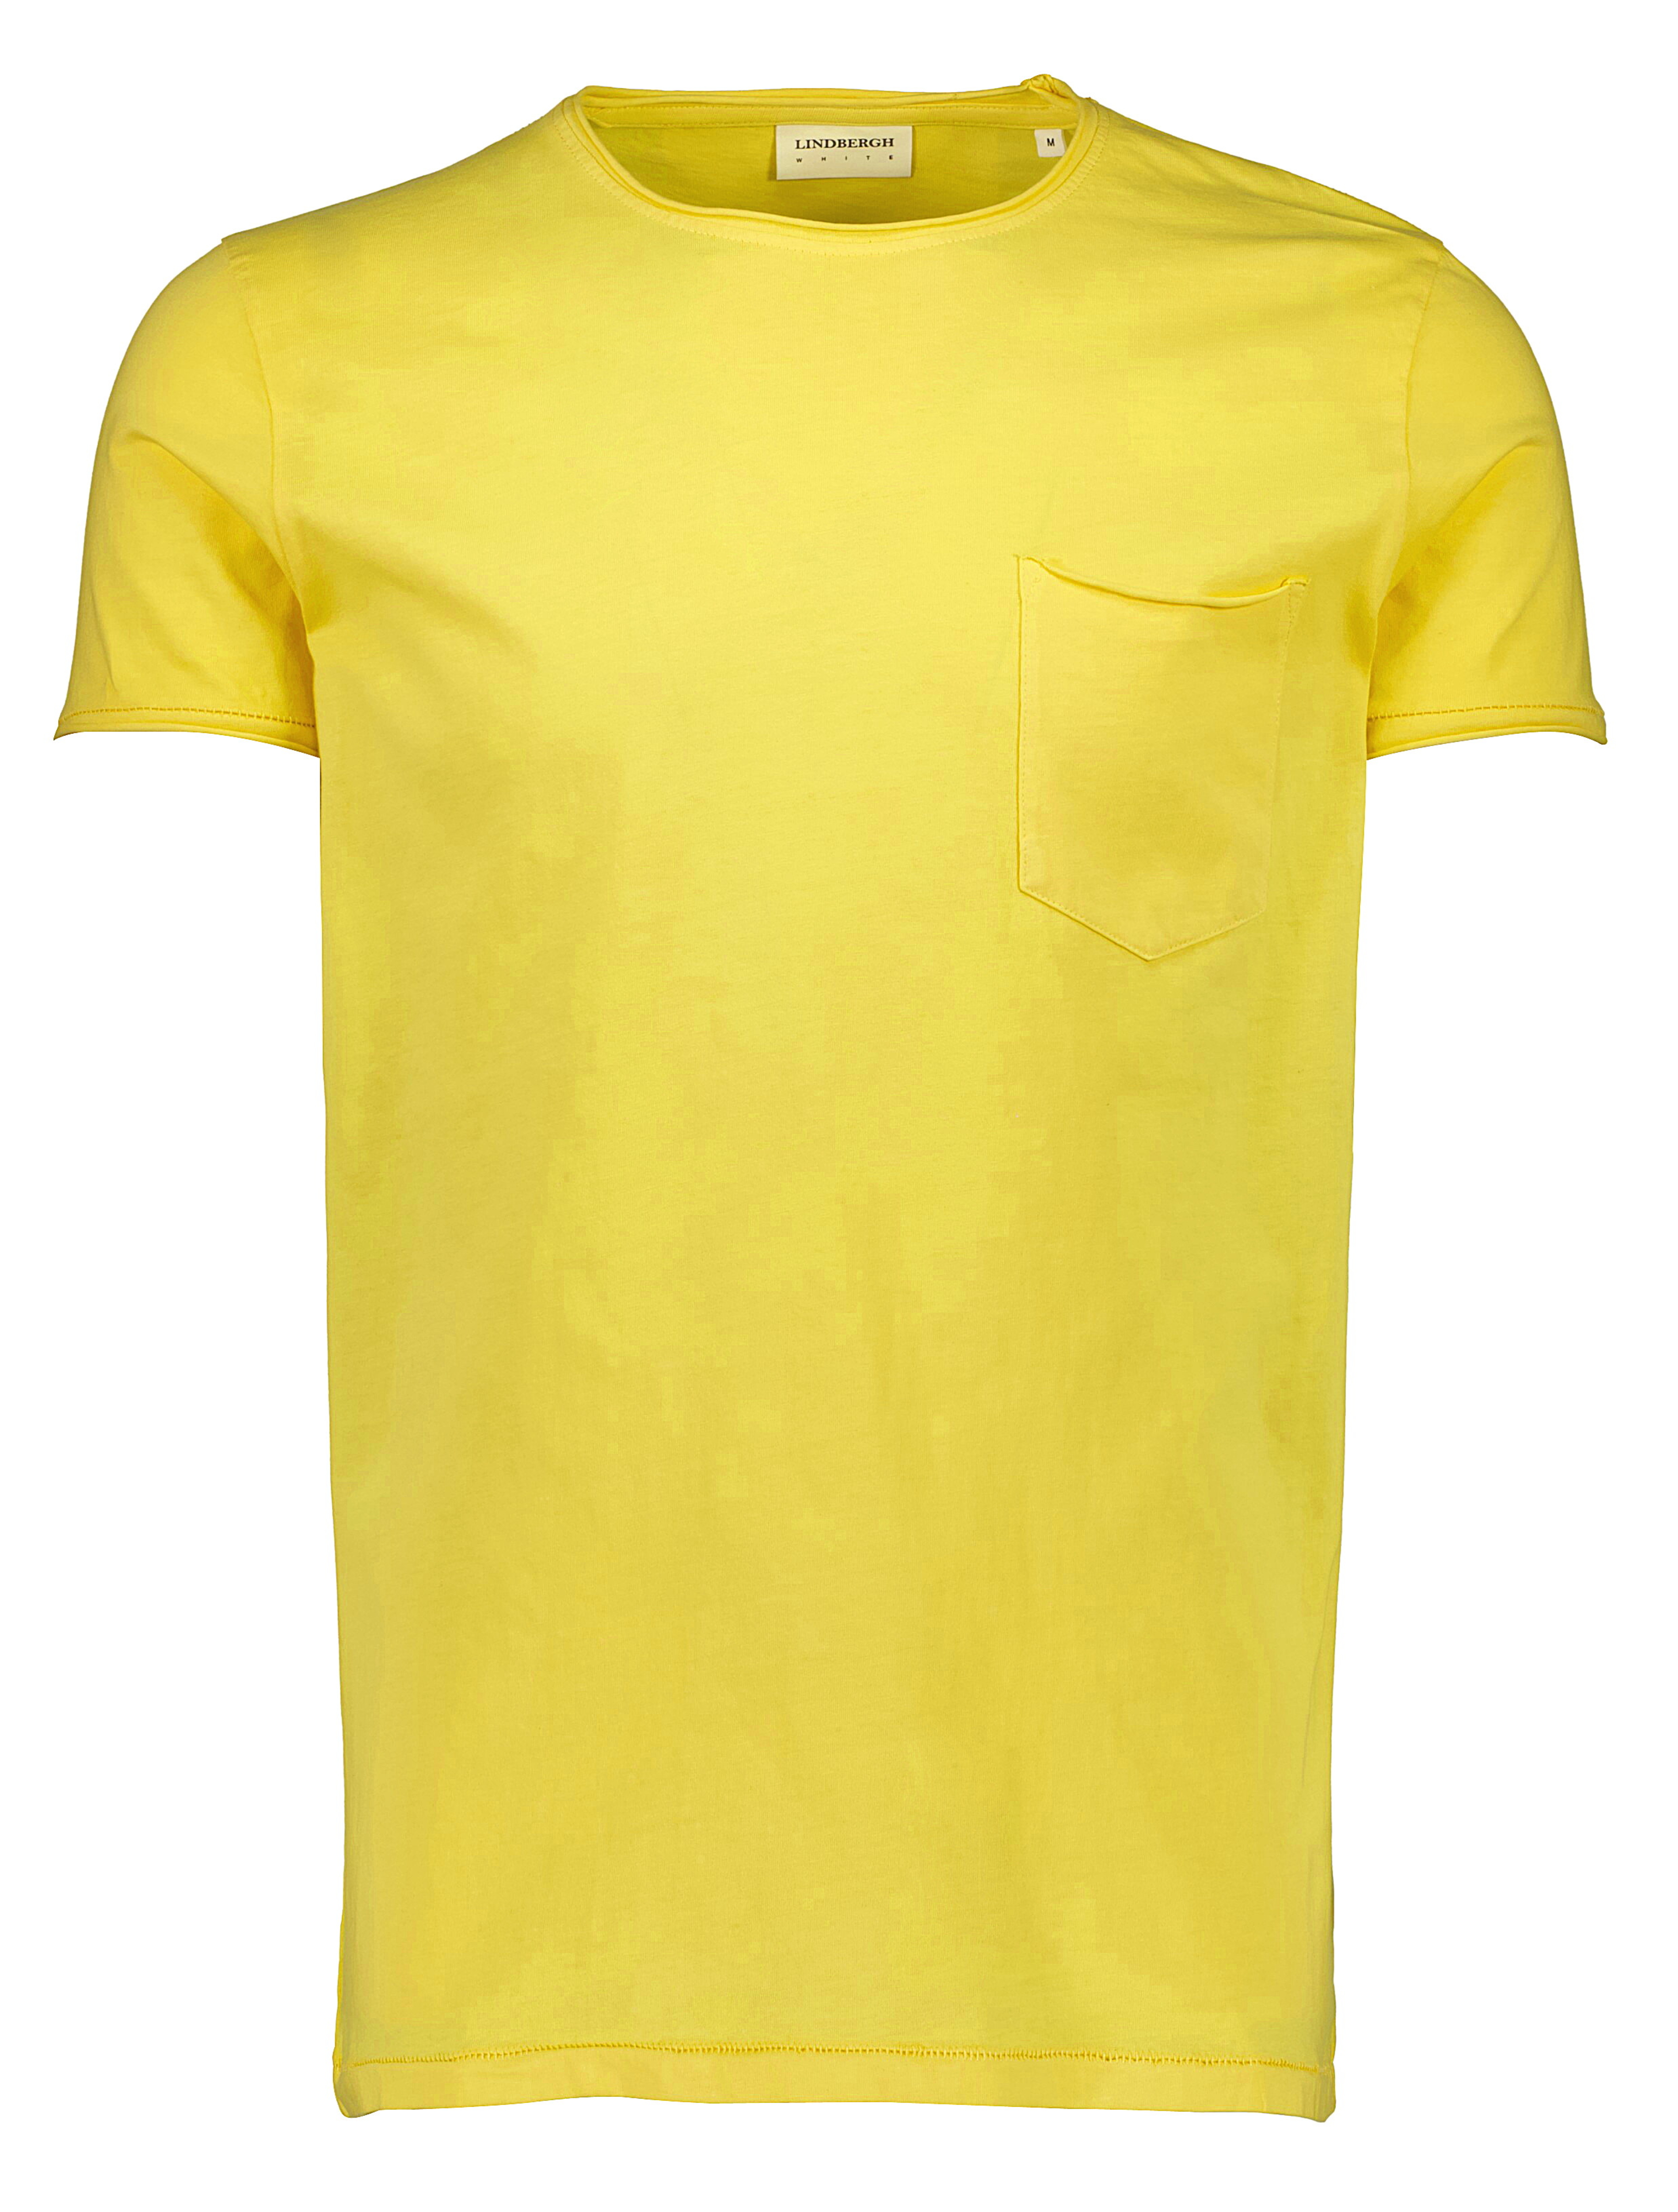 Lindbergh T-Shirt gelb / yellow